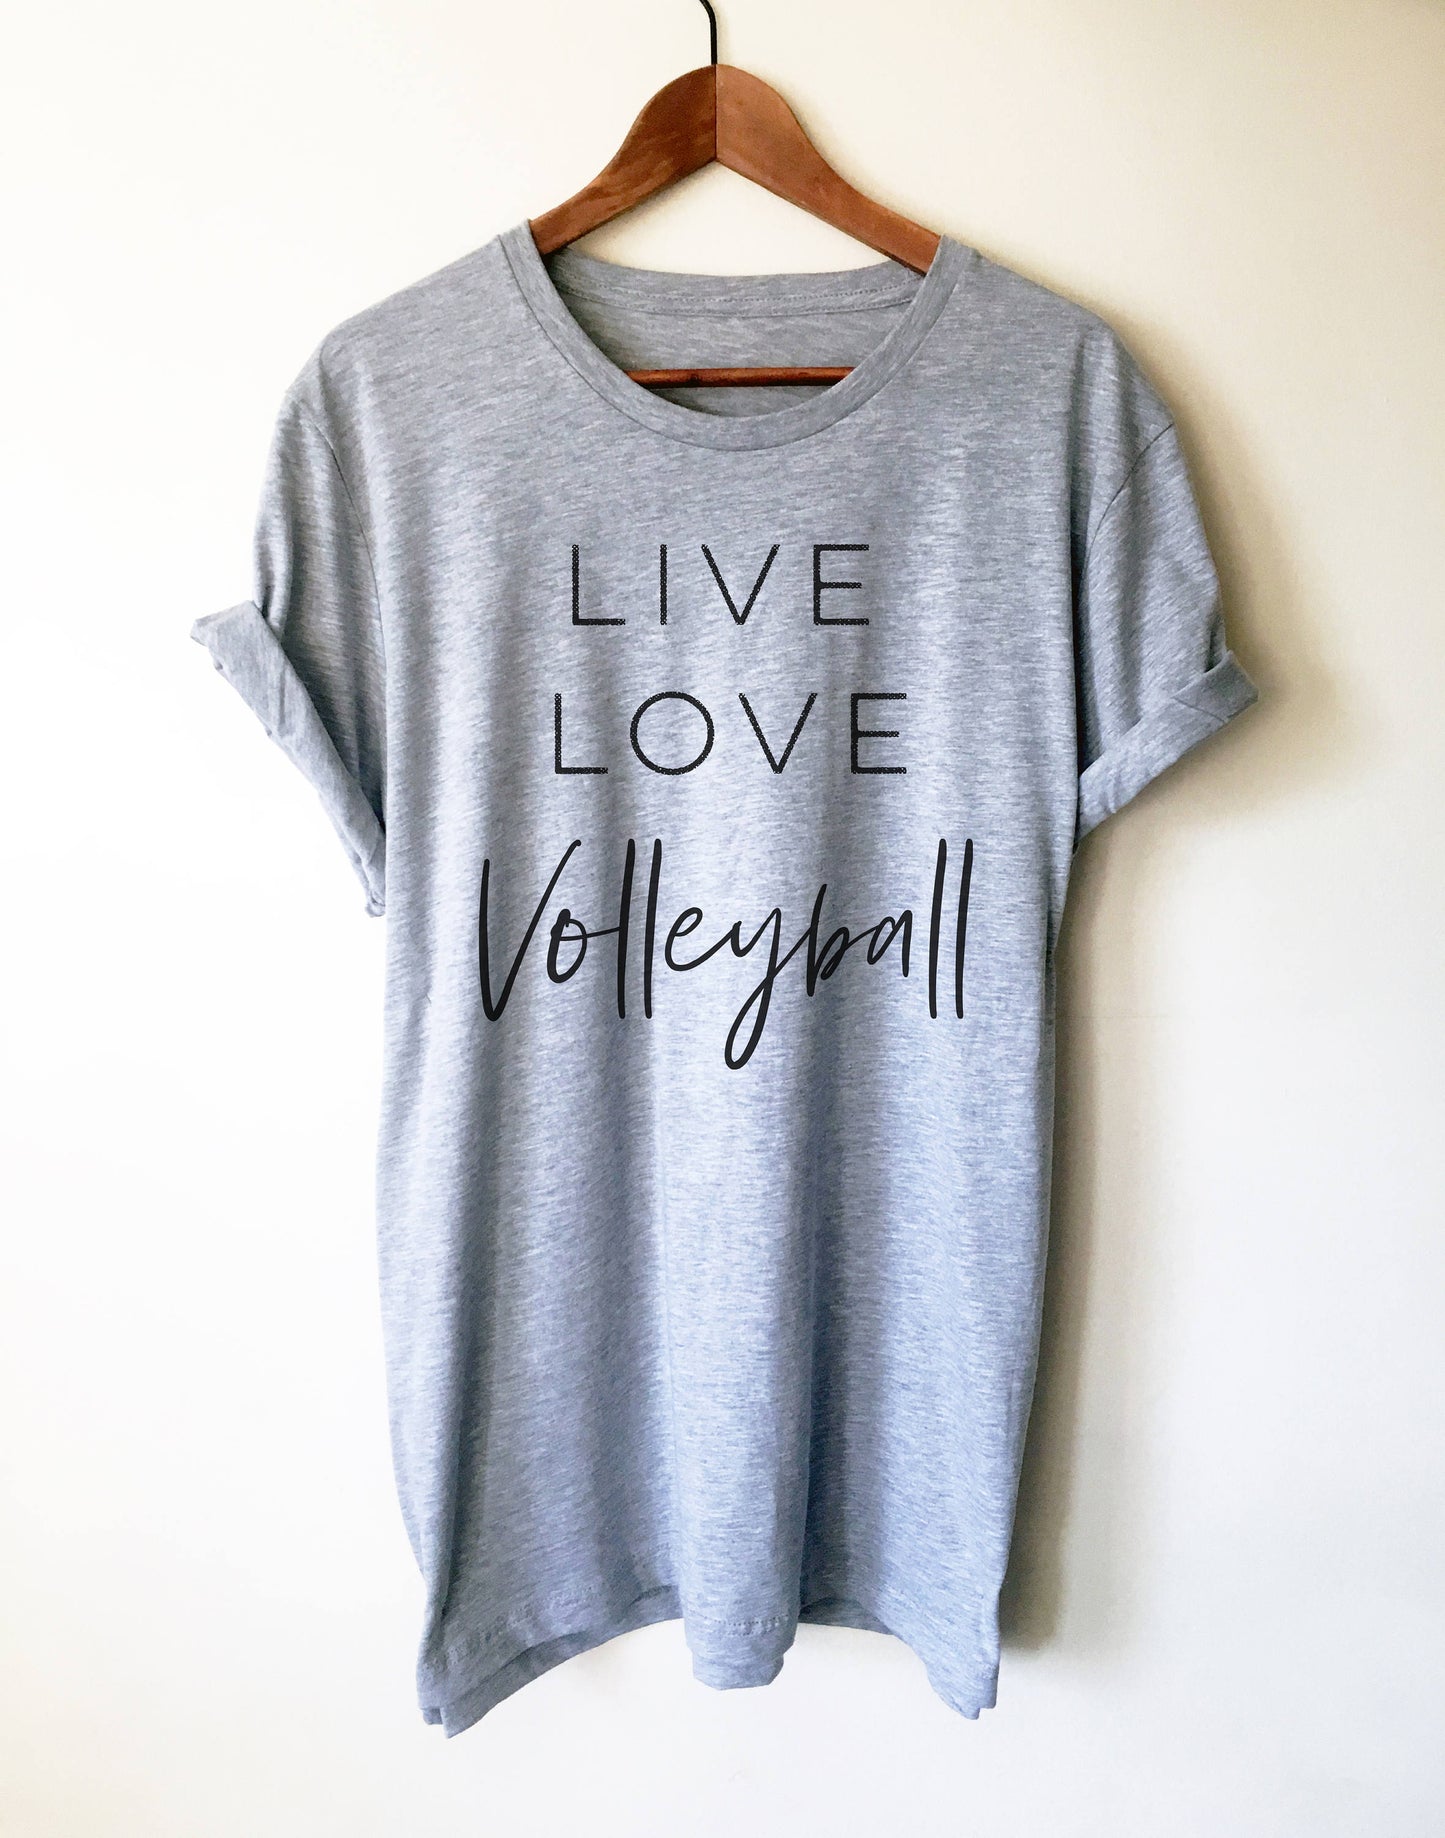 Live Love Volleyball Unisex Shirt - Volleyball Shirt, Volleyball Mom Shirt, Volleyball gift, Volleyball team, Volleyball player